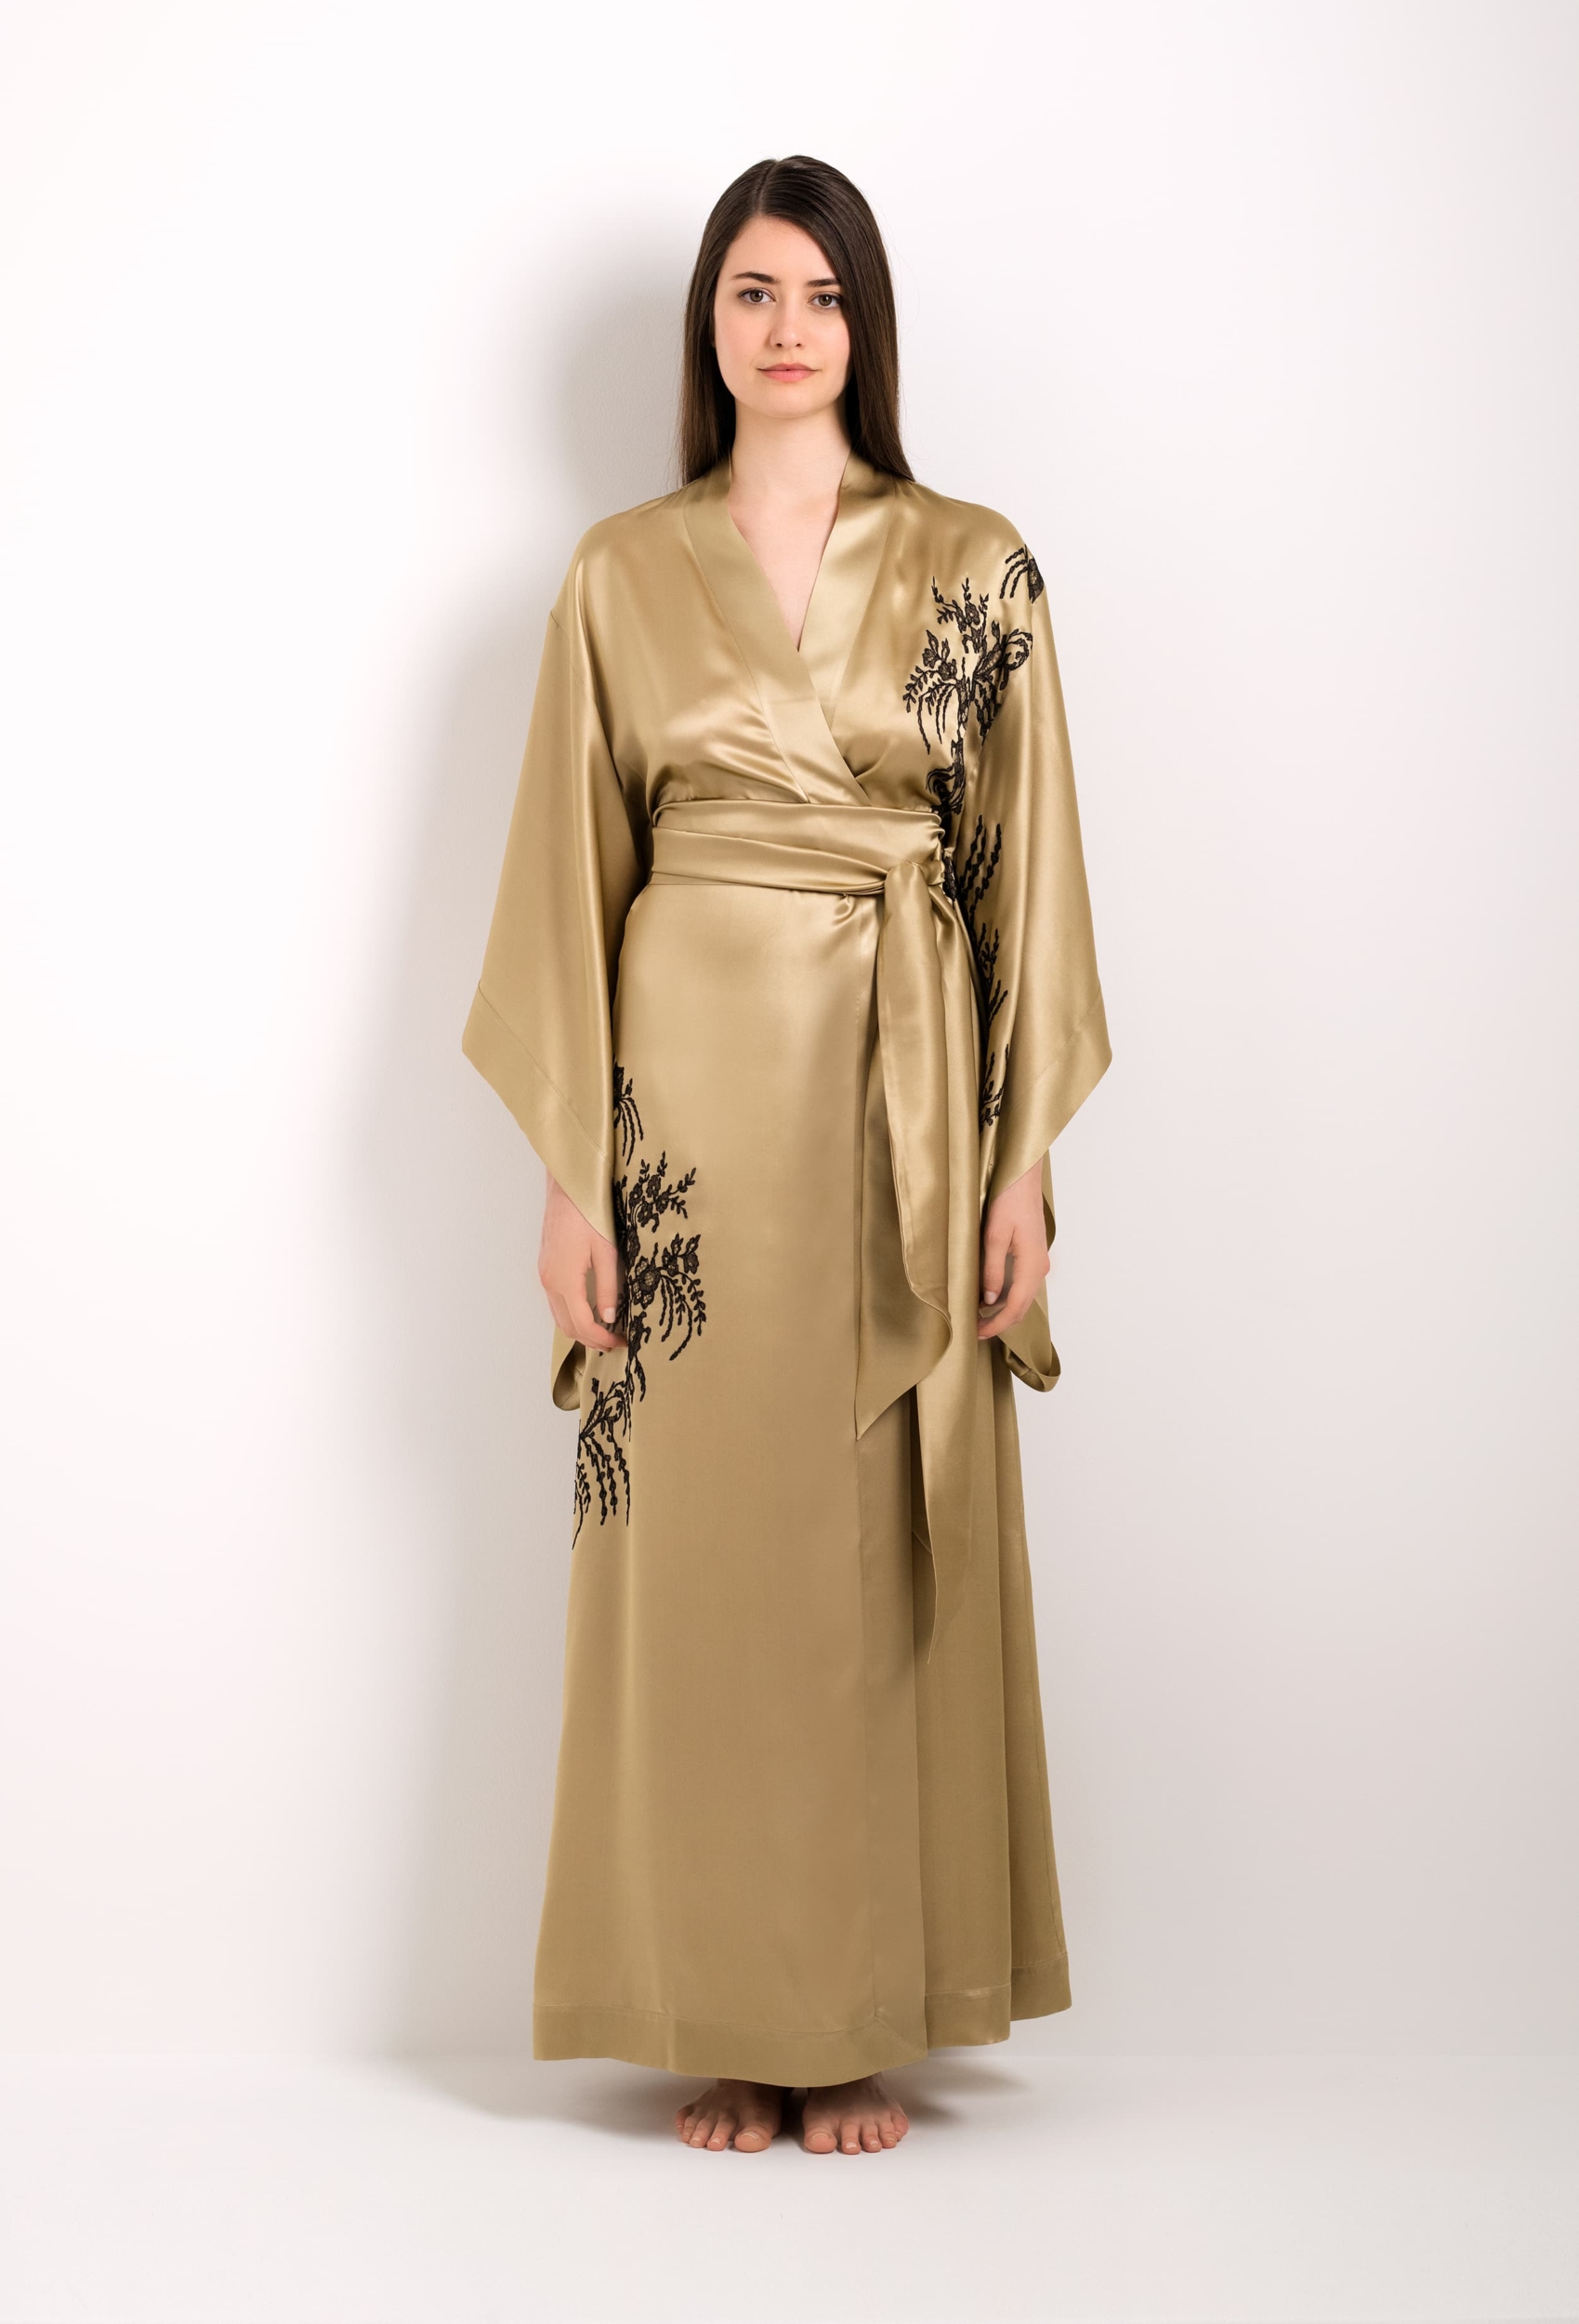 Venise black Long lace - kimono - and gold Caudry Carine Gilson silk